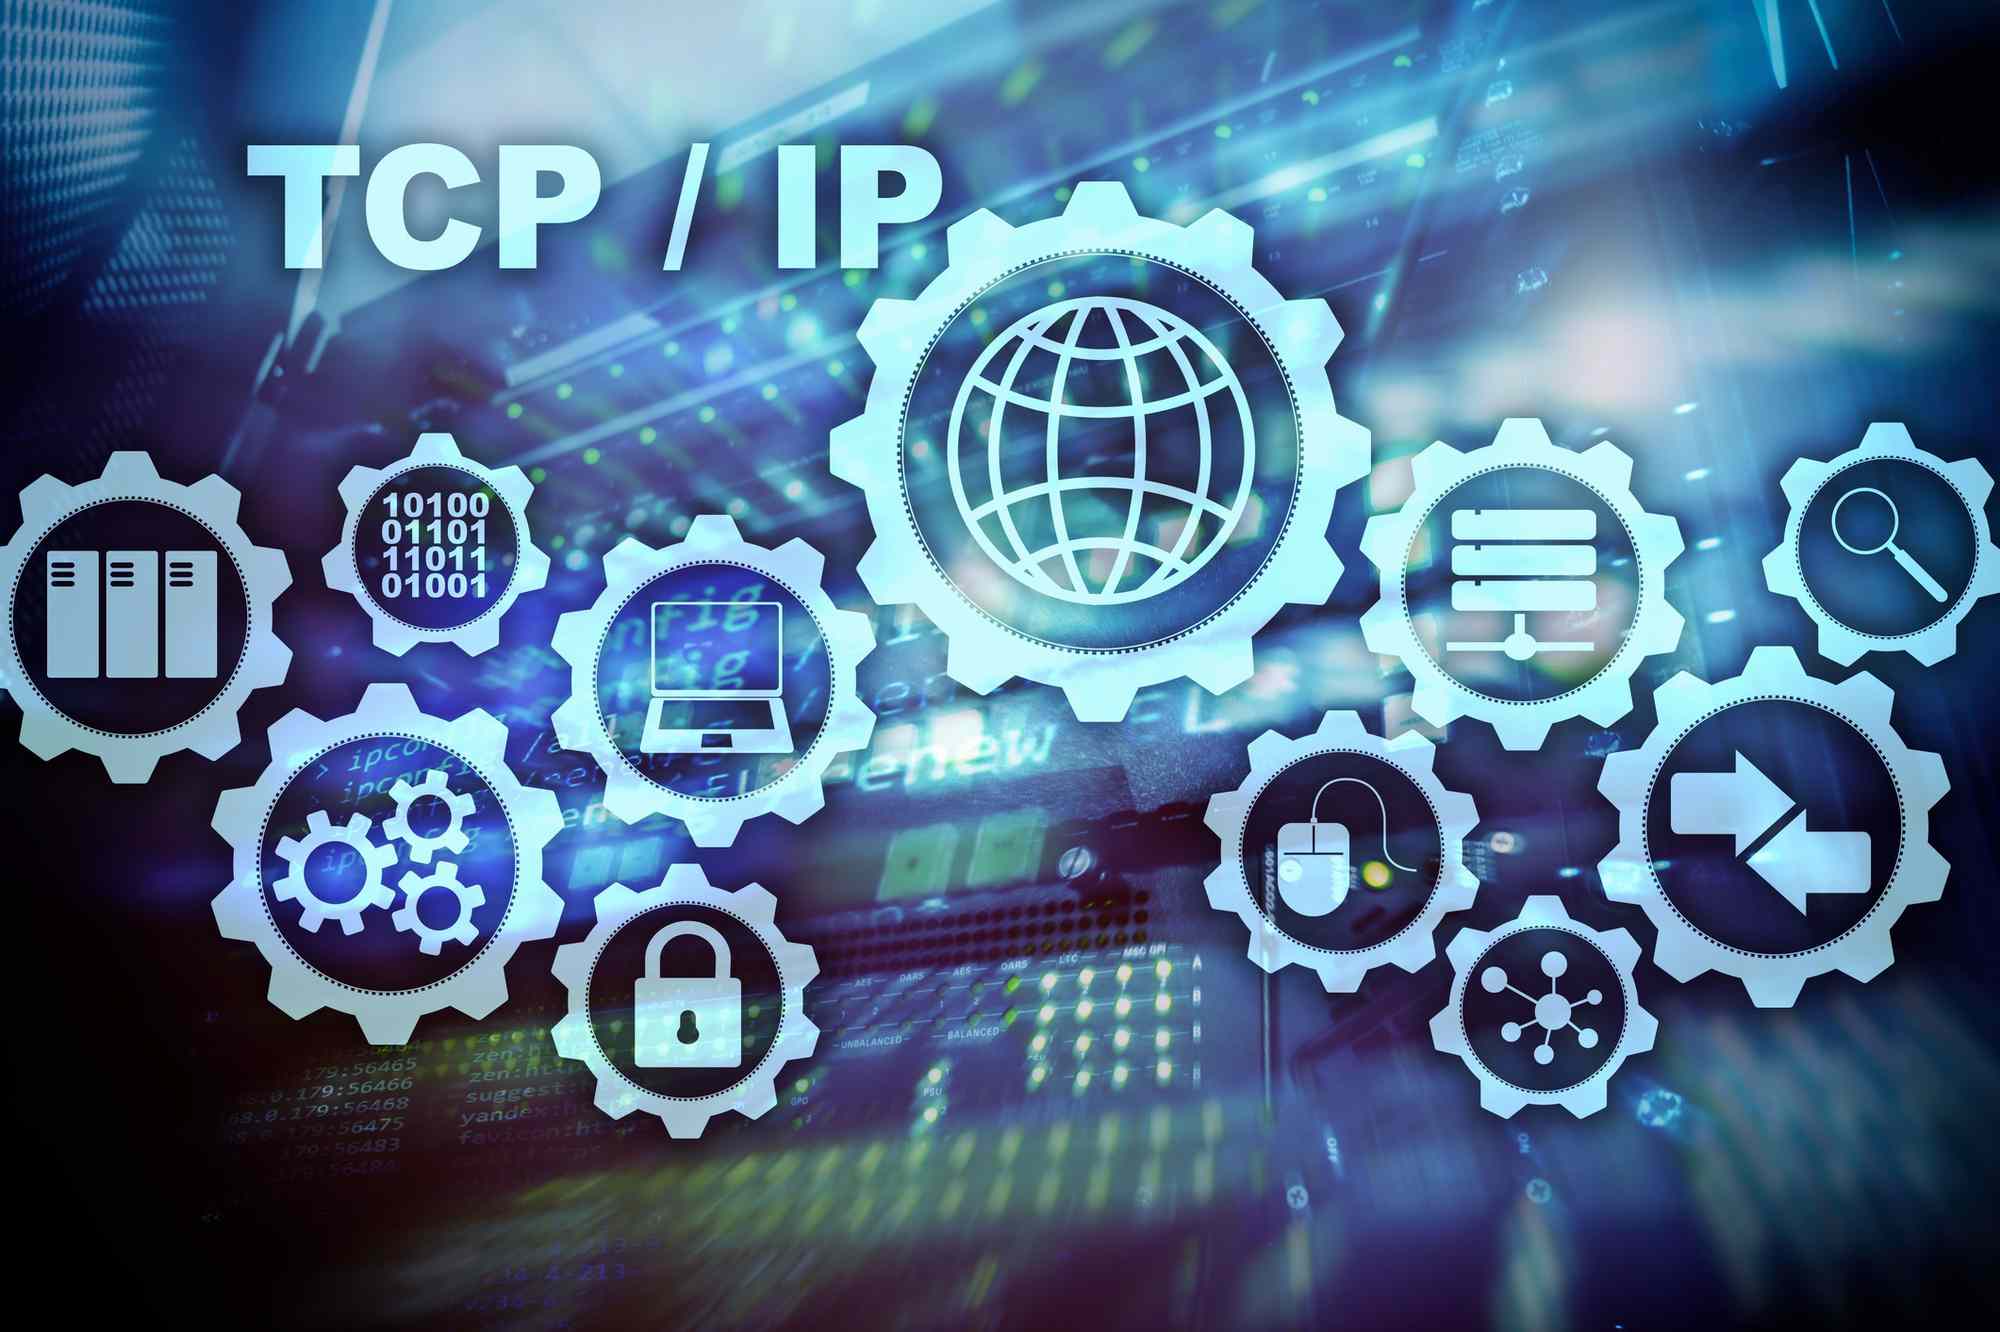 Tietokoneverkon termit TCP/IP